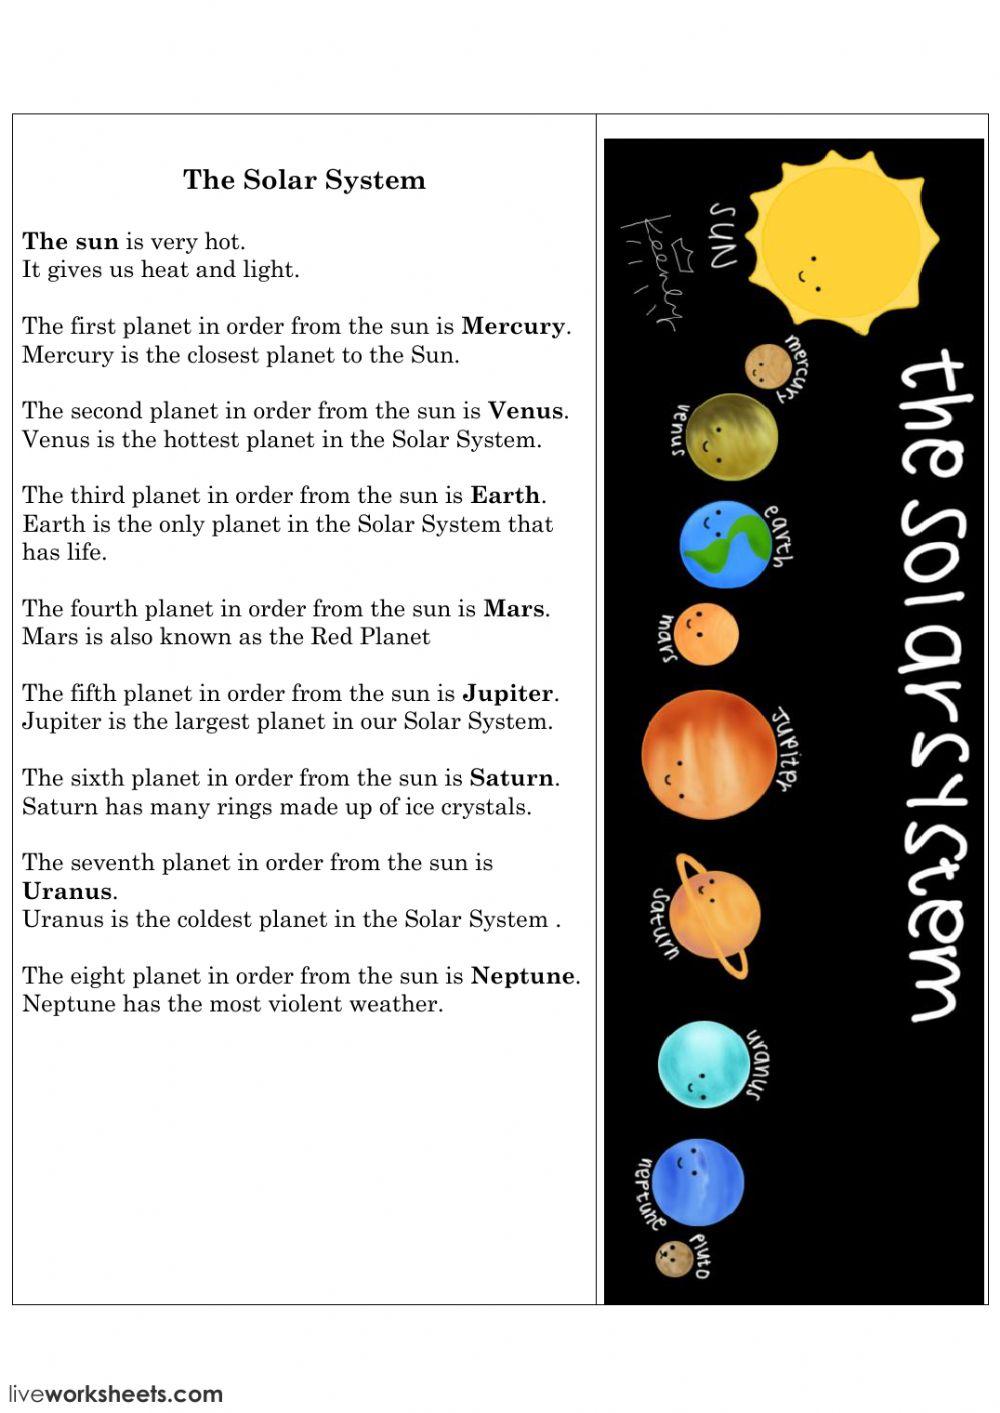 Planets questions. Solar System задания. The Solar System задания на английском. Солнечная система на английском языке. Планеты солнечной системы задания.